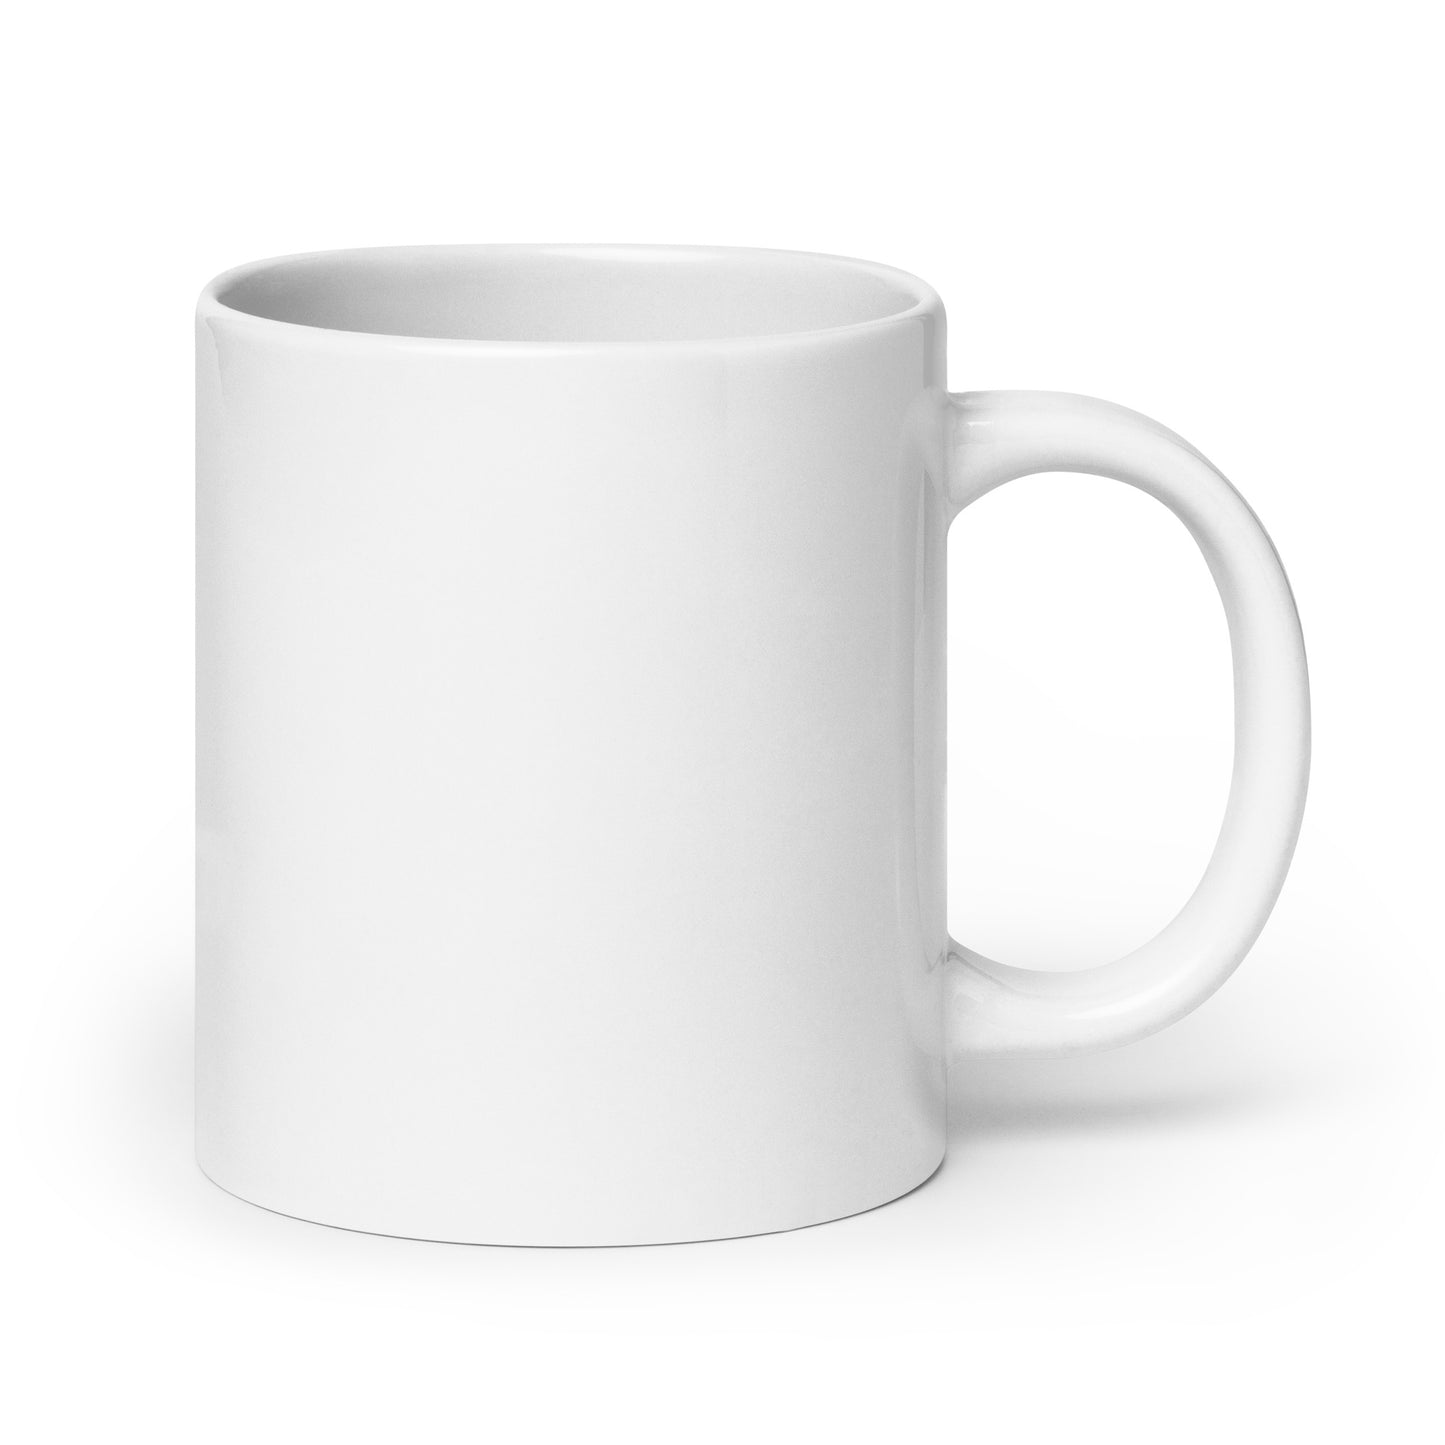 Supreme Cunts mug